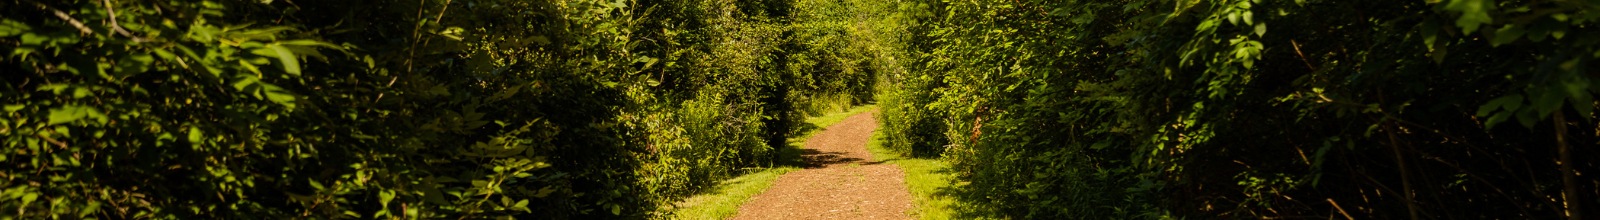 A dirt path runs through thick brush on both sides 